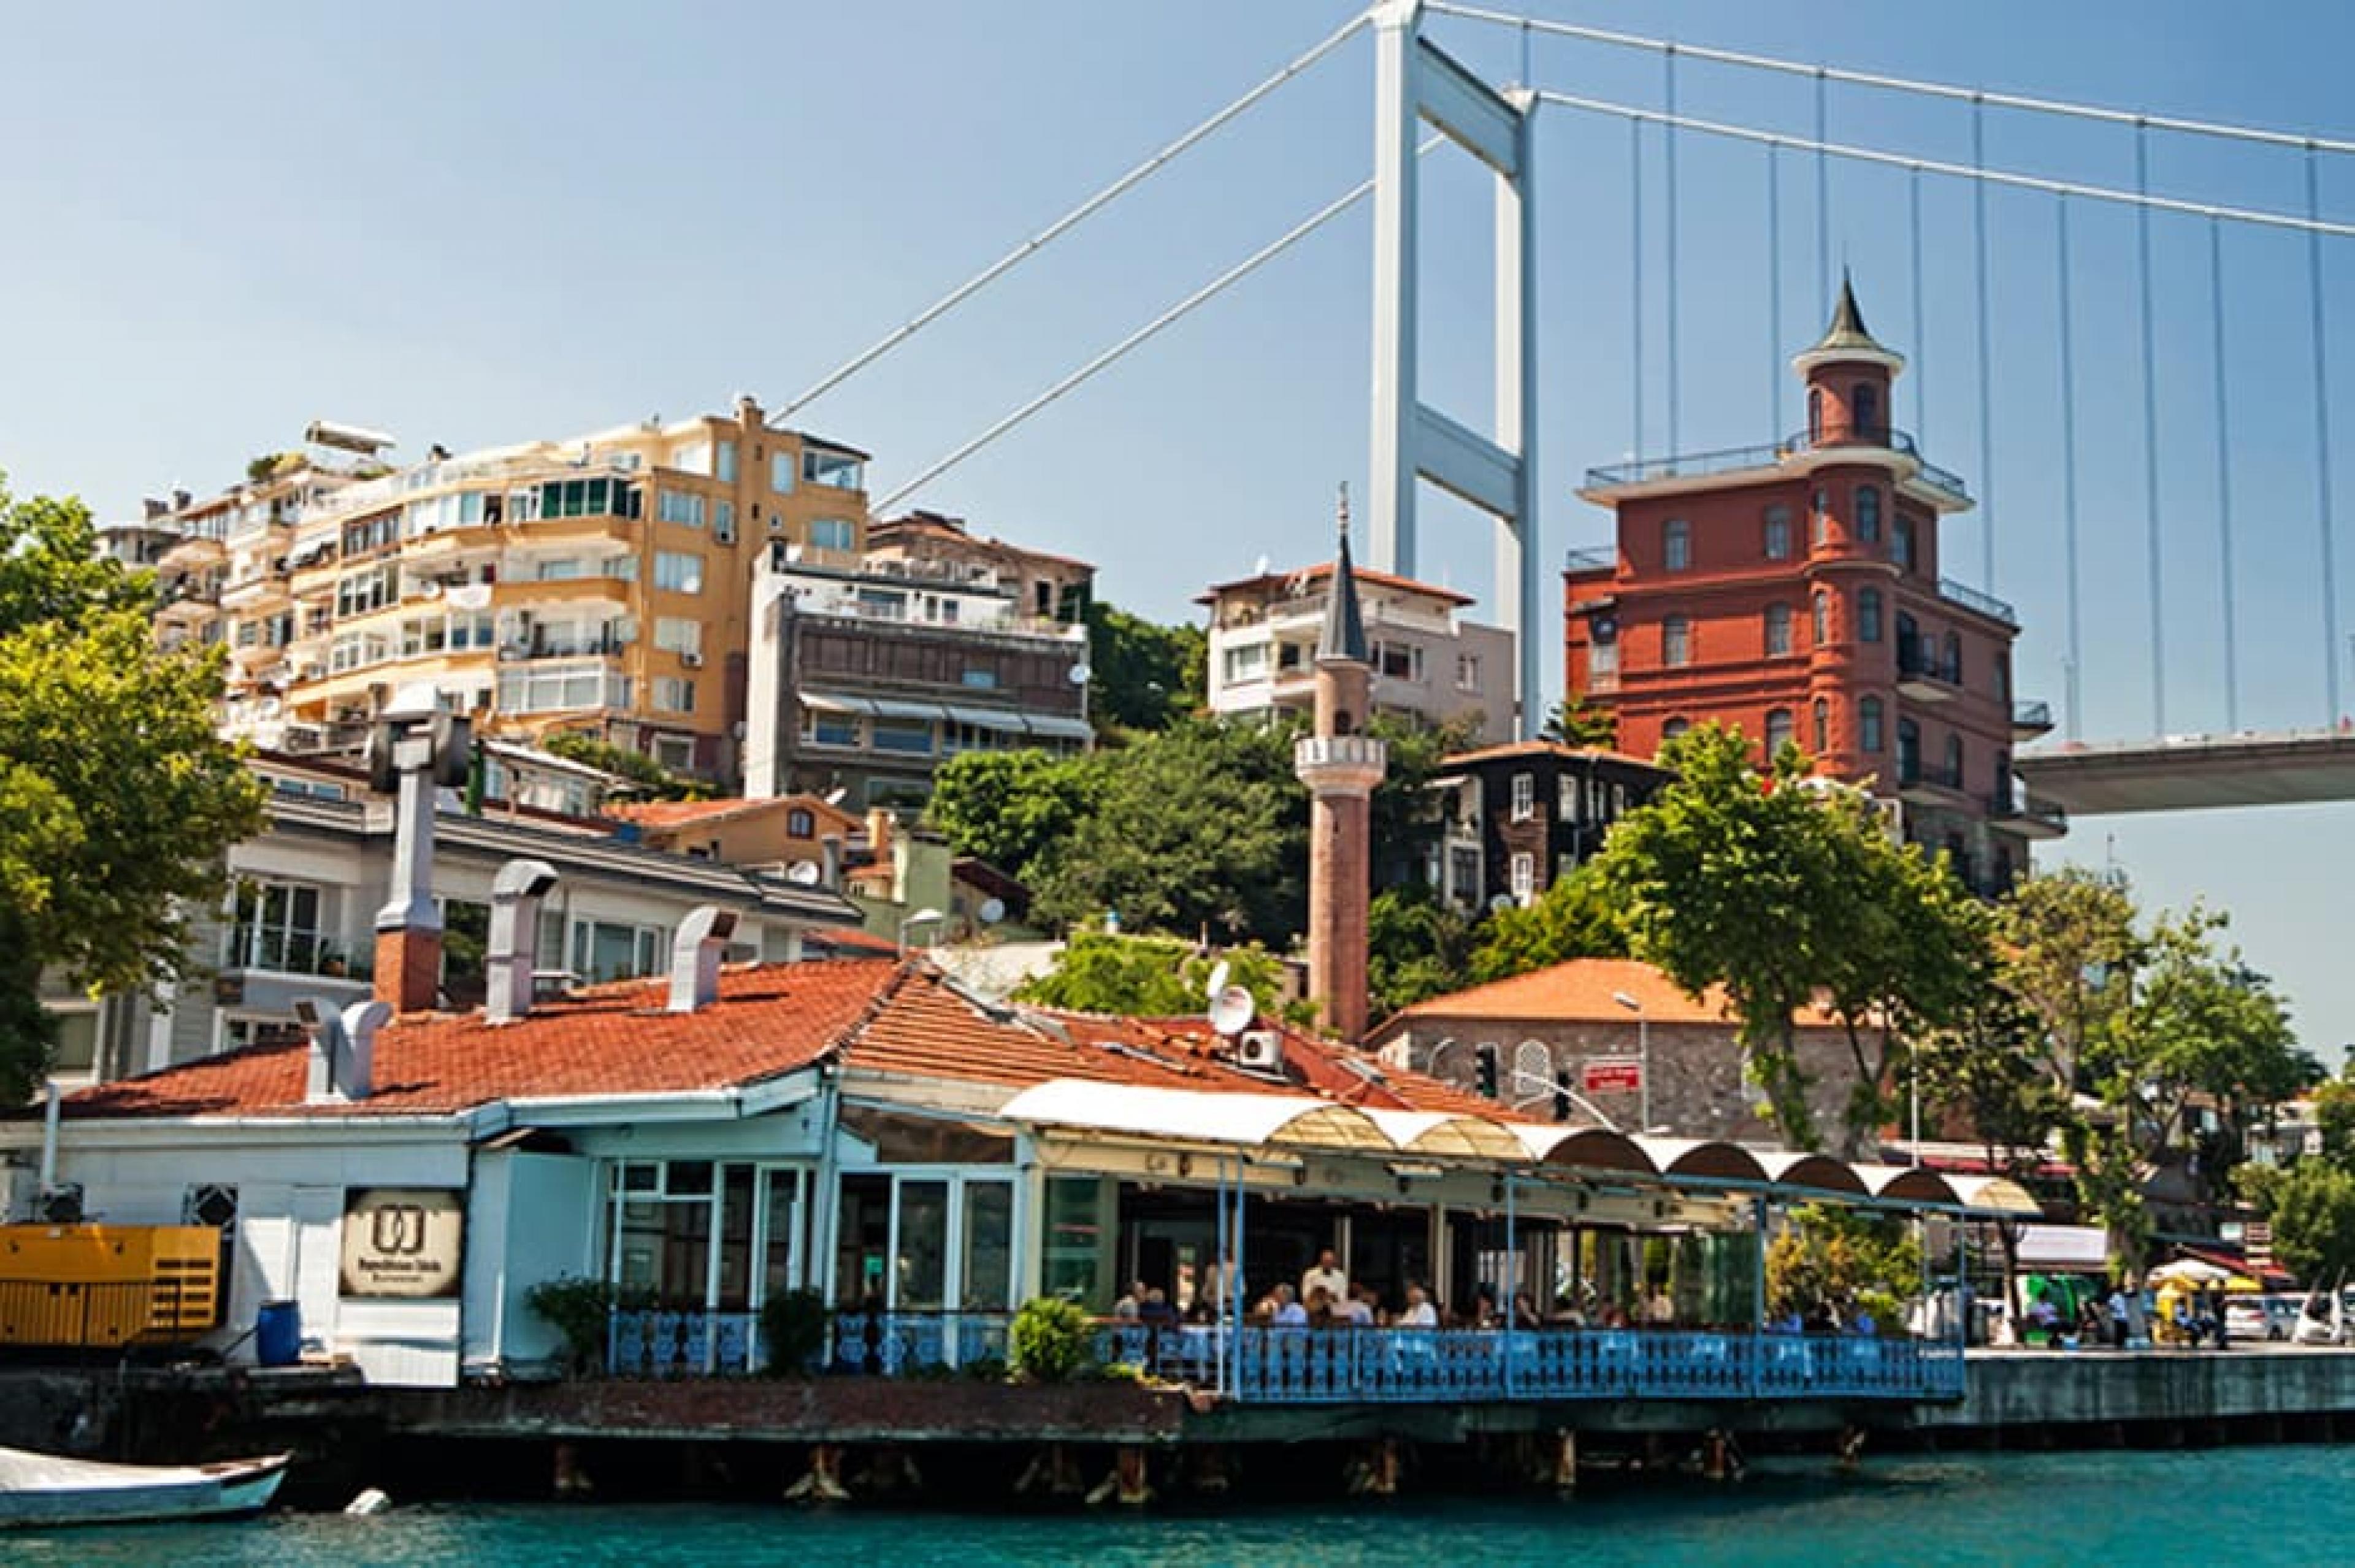 Exterior View : Rumelihisarı Iskele, Istanbul, Turkey